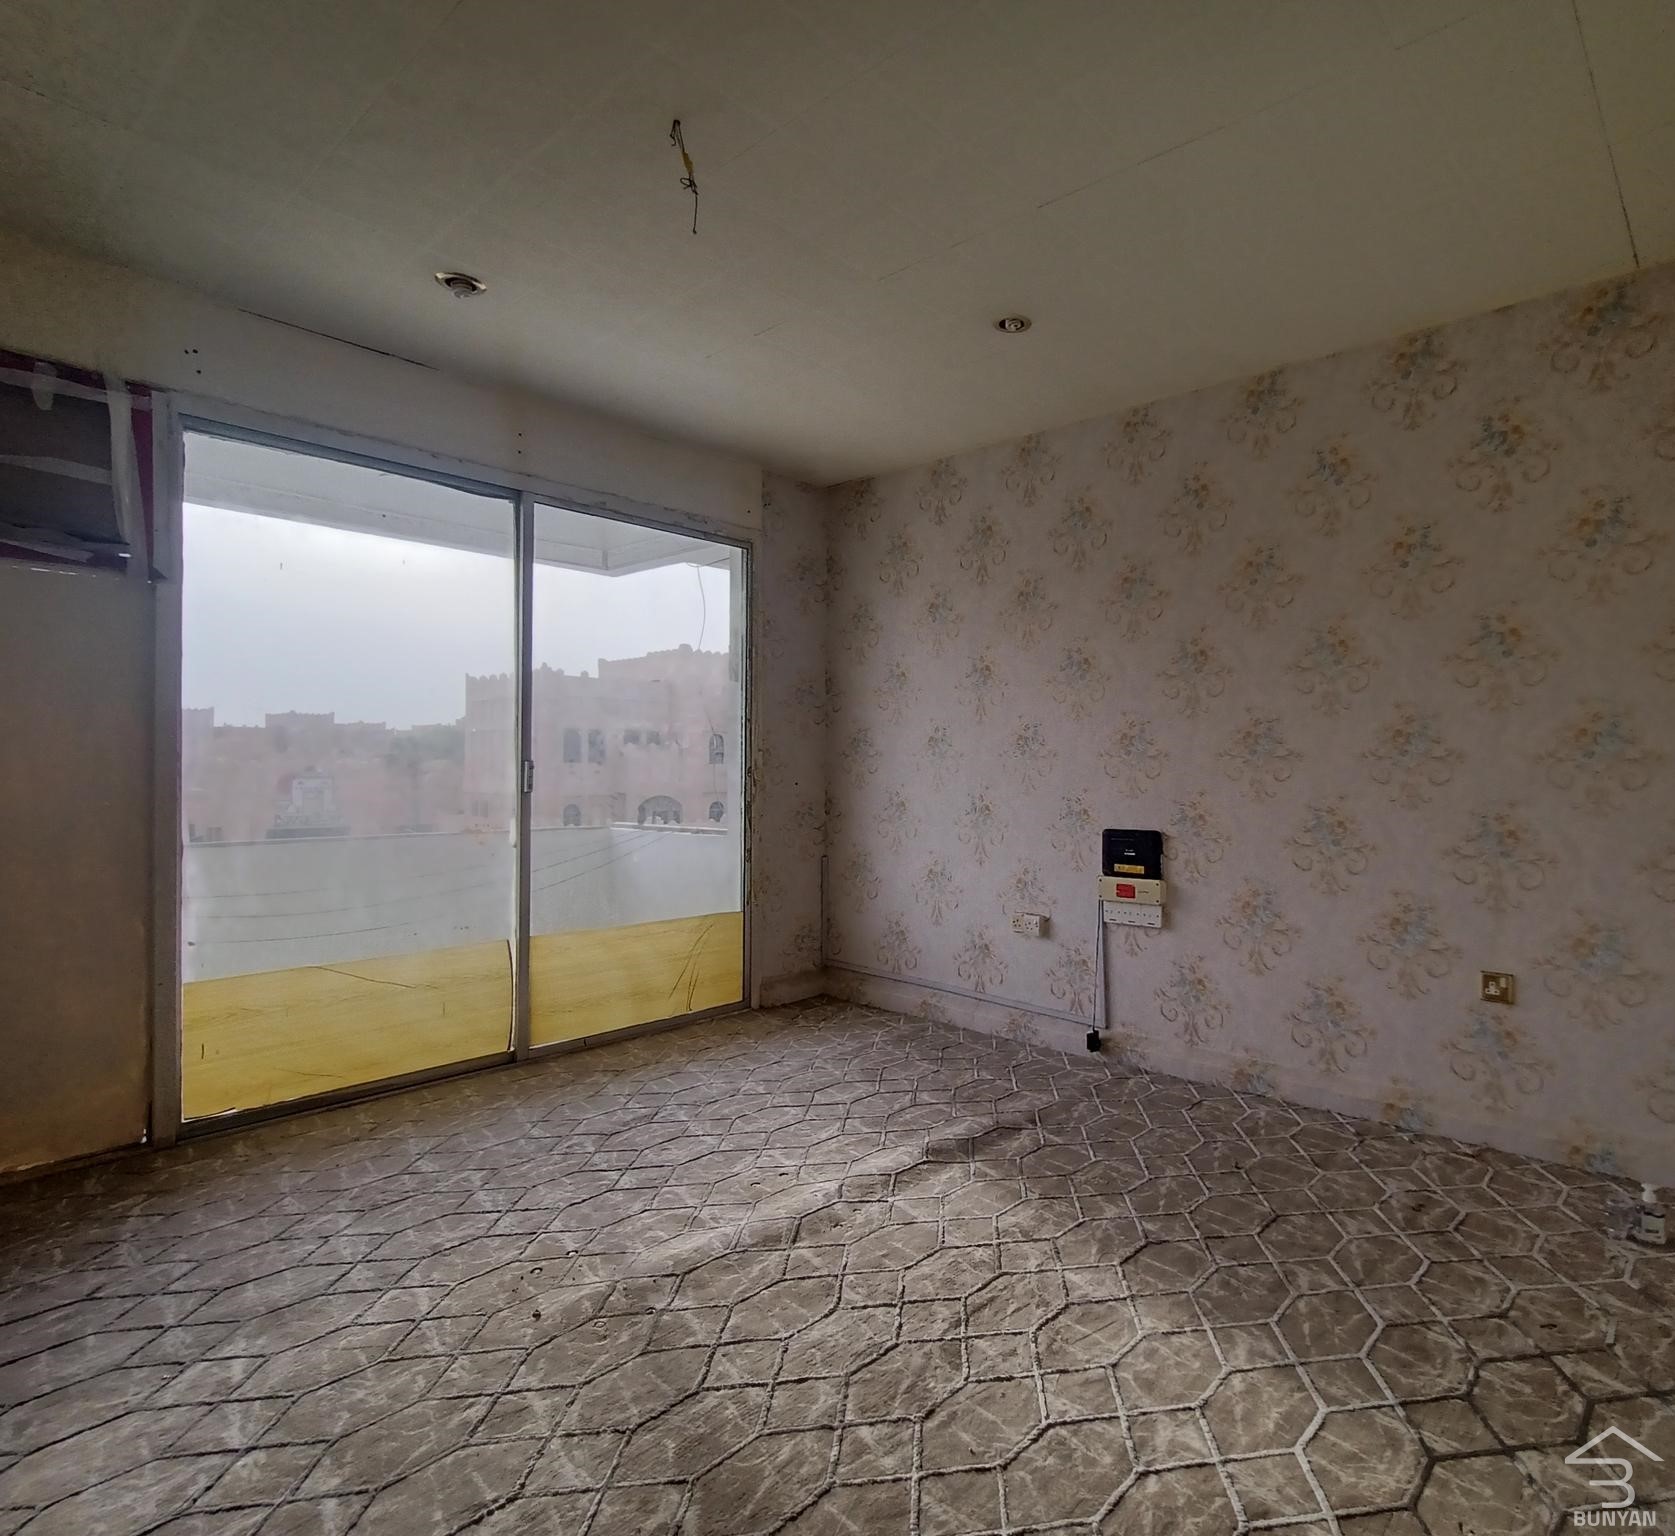 2 BR flat located in al luqta